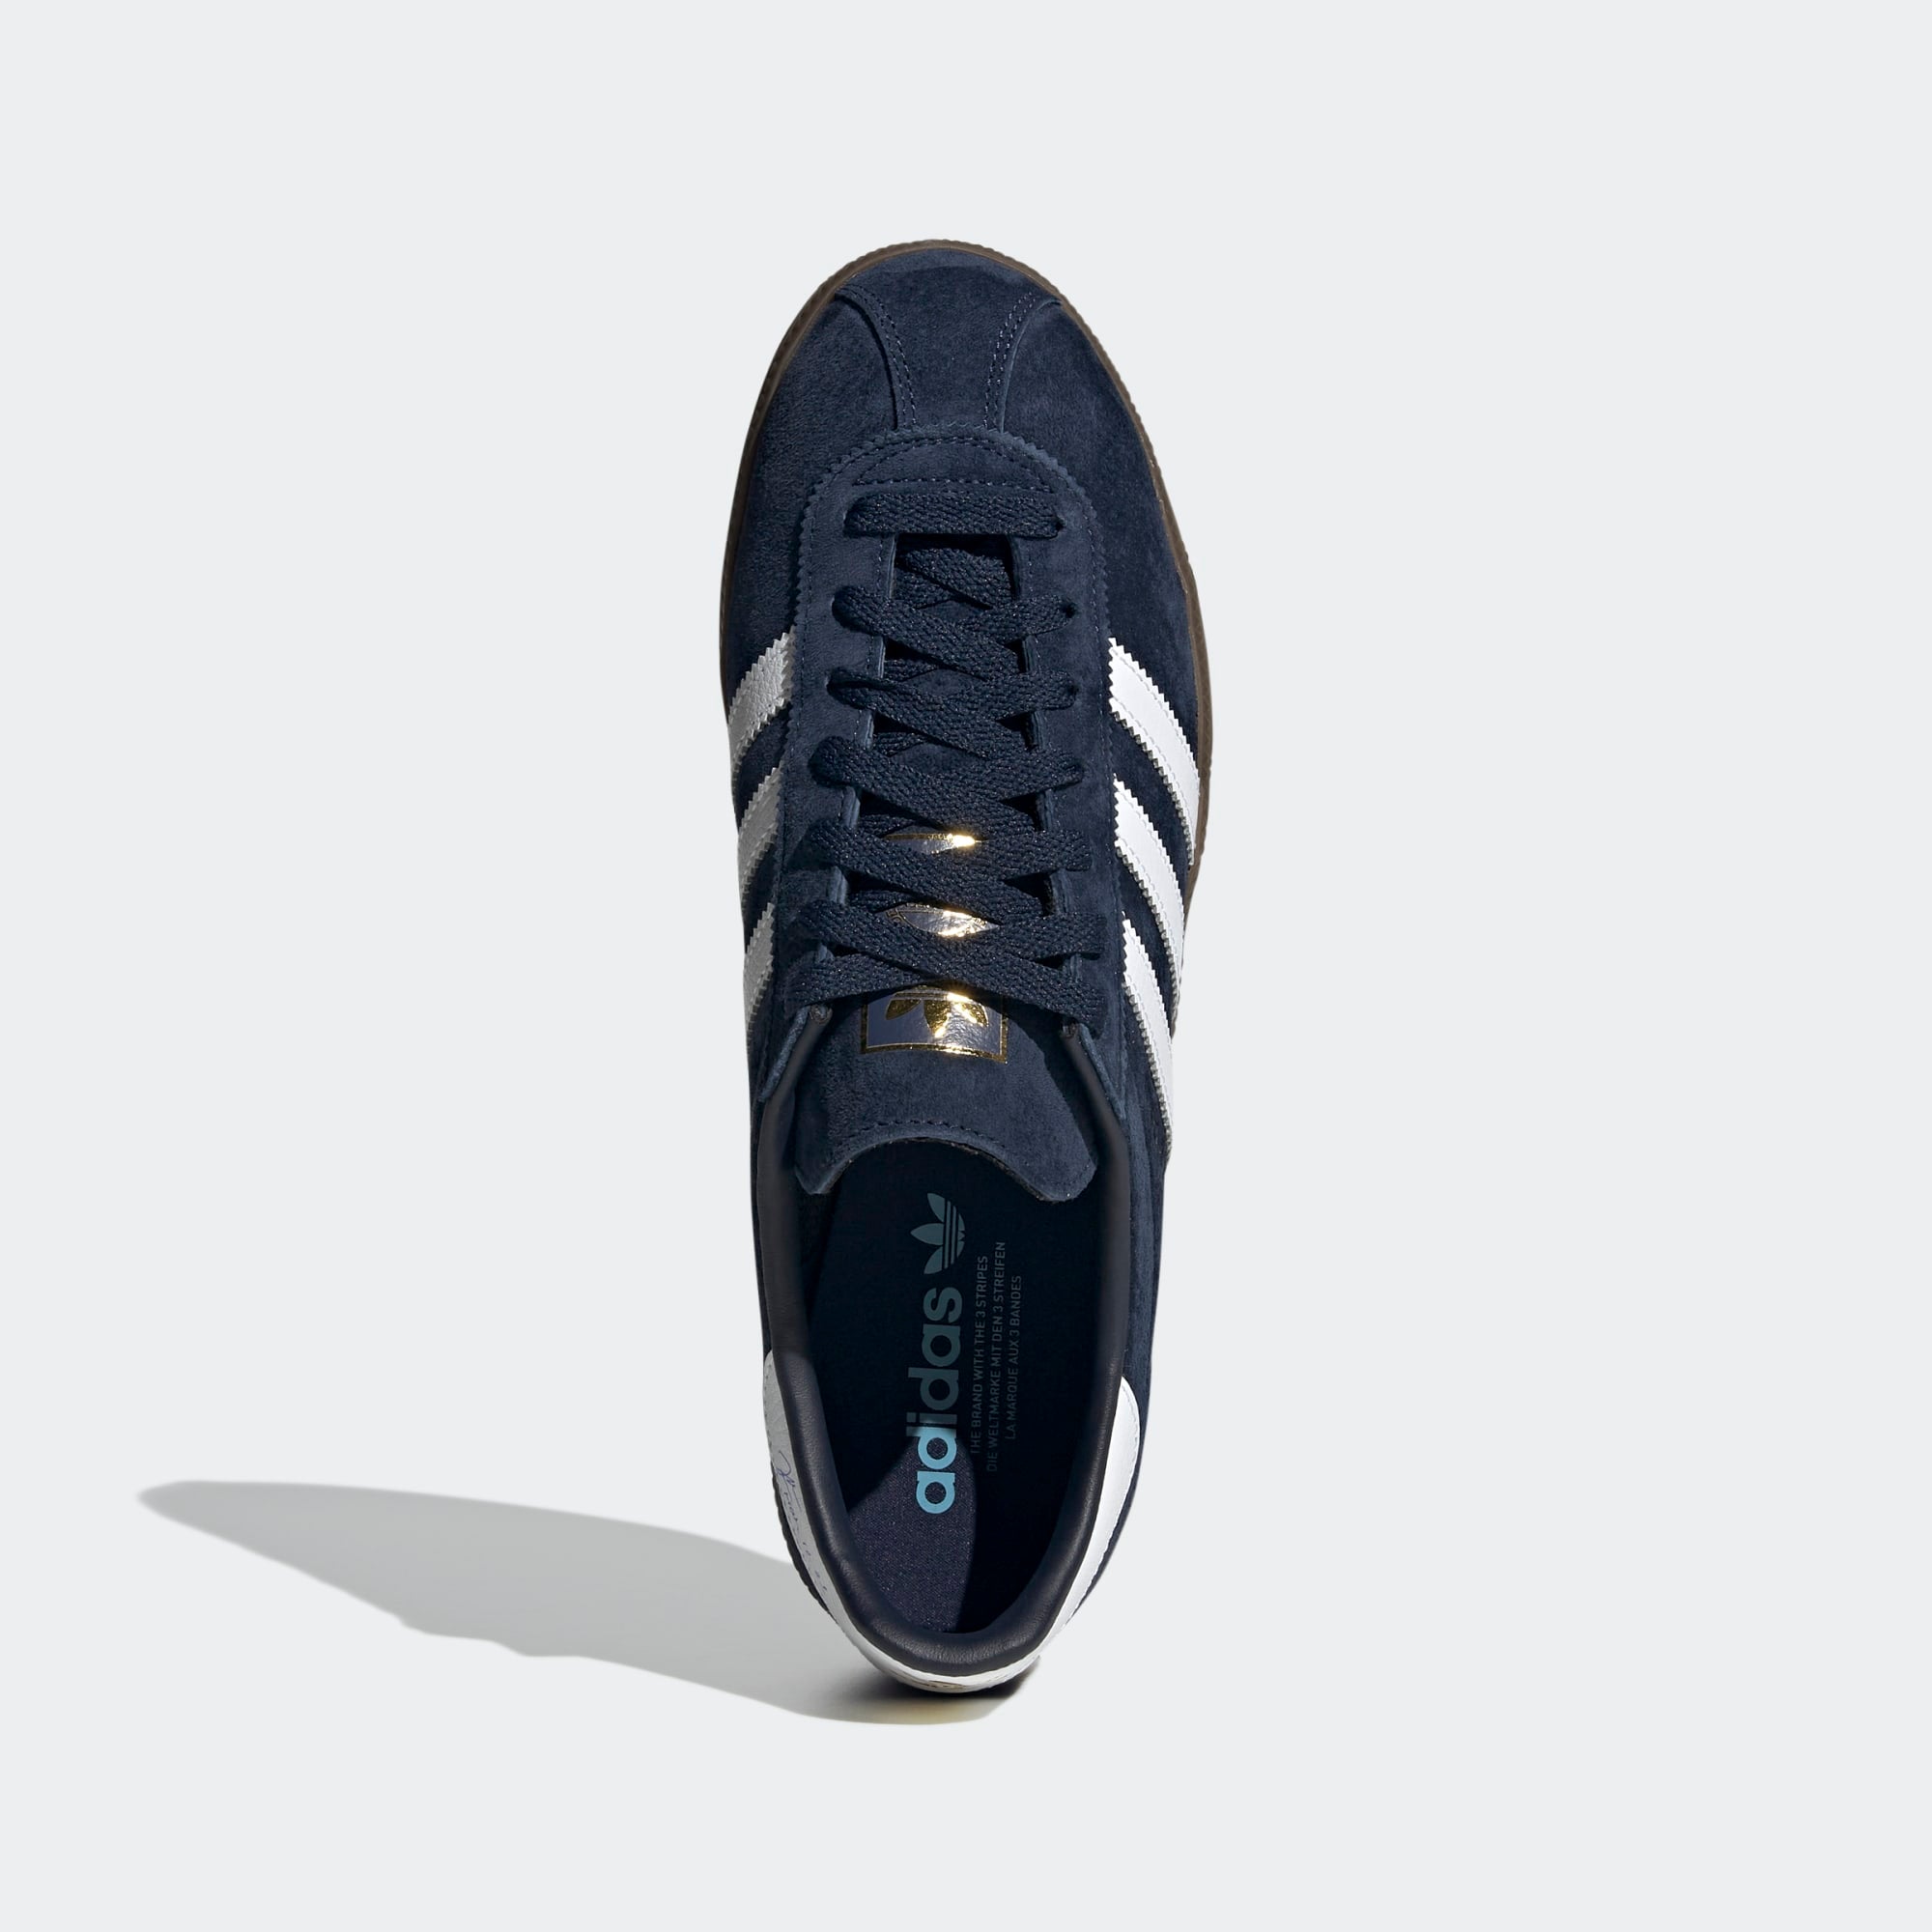 Adidas Originals München Shoes Collegiate / Clear Blue / | Find Your Sole